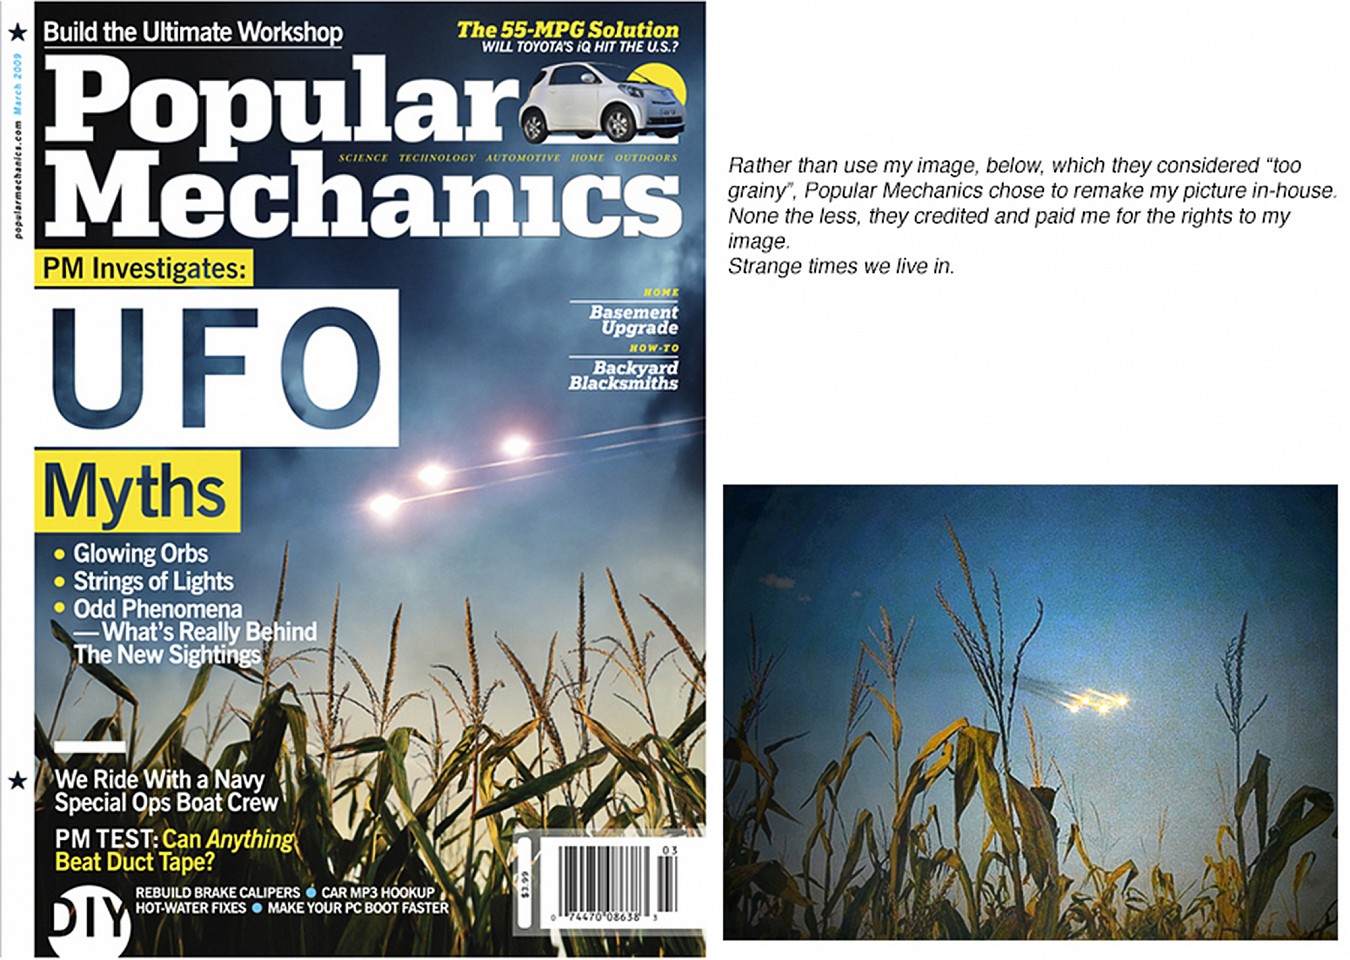 Oliver Wasow, Popular Mechanics
2009 March, Commercial publication